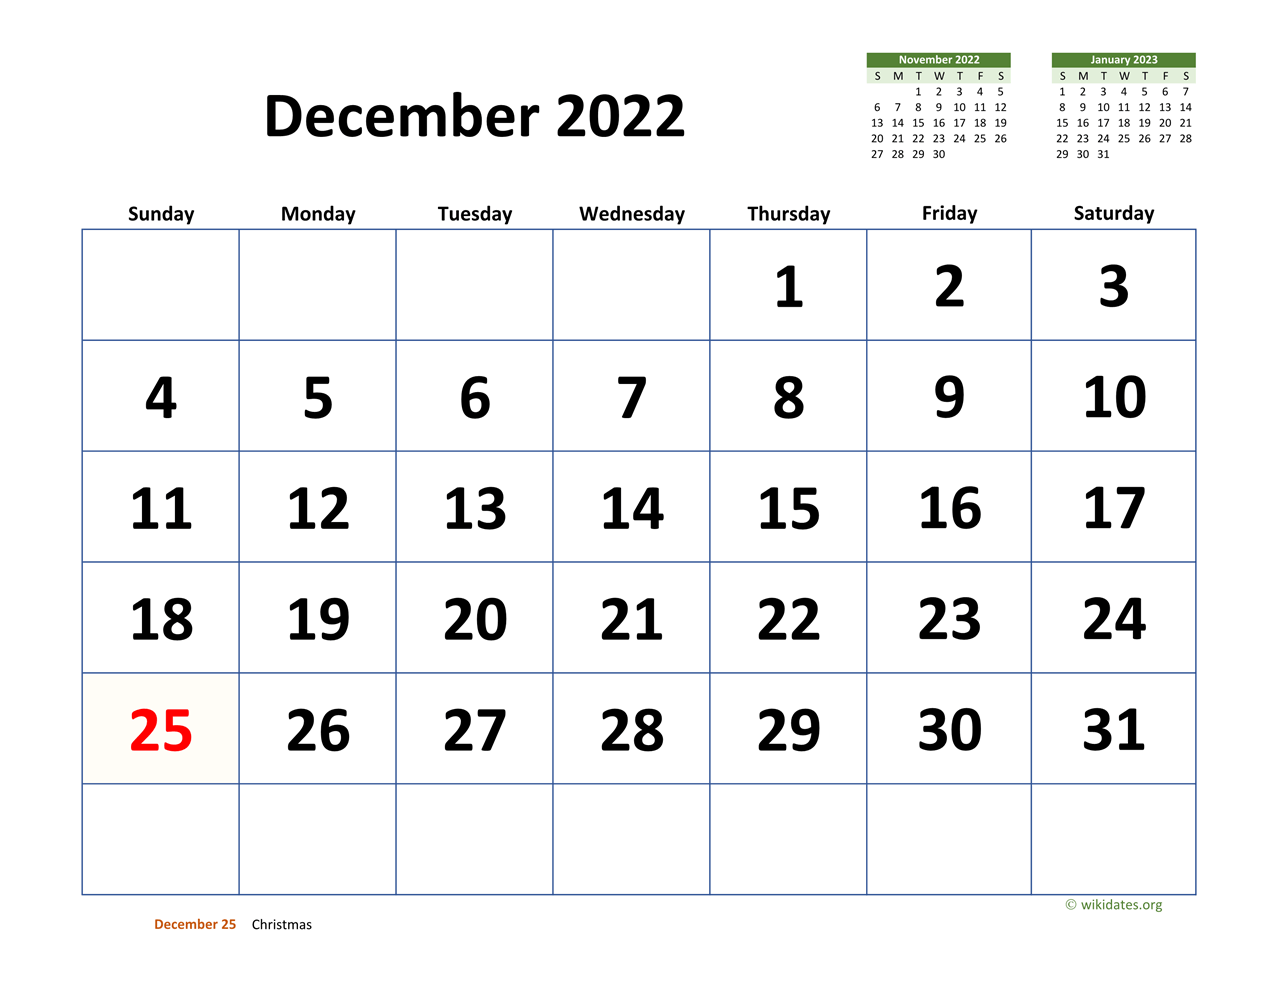 December Month Calendar 2022 December 2022 Calendar With Extra-Large Dates | Wikidates.org